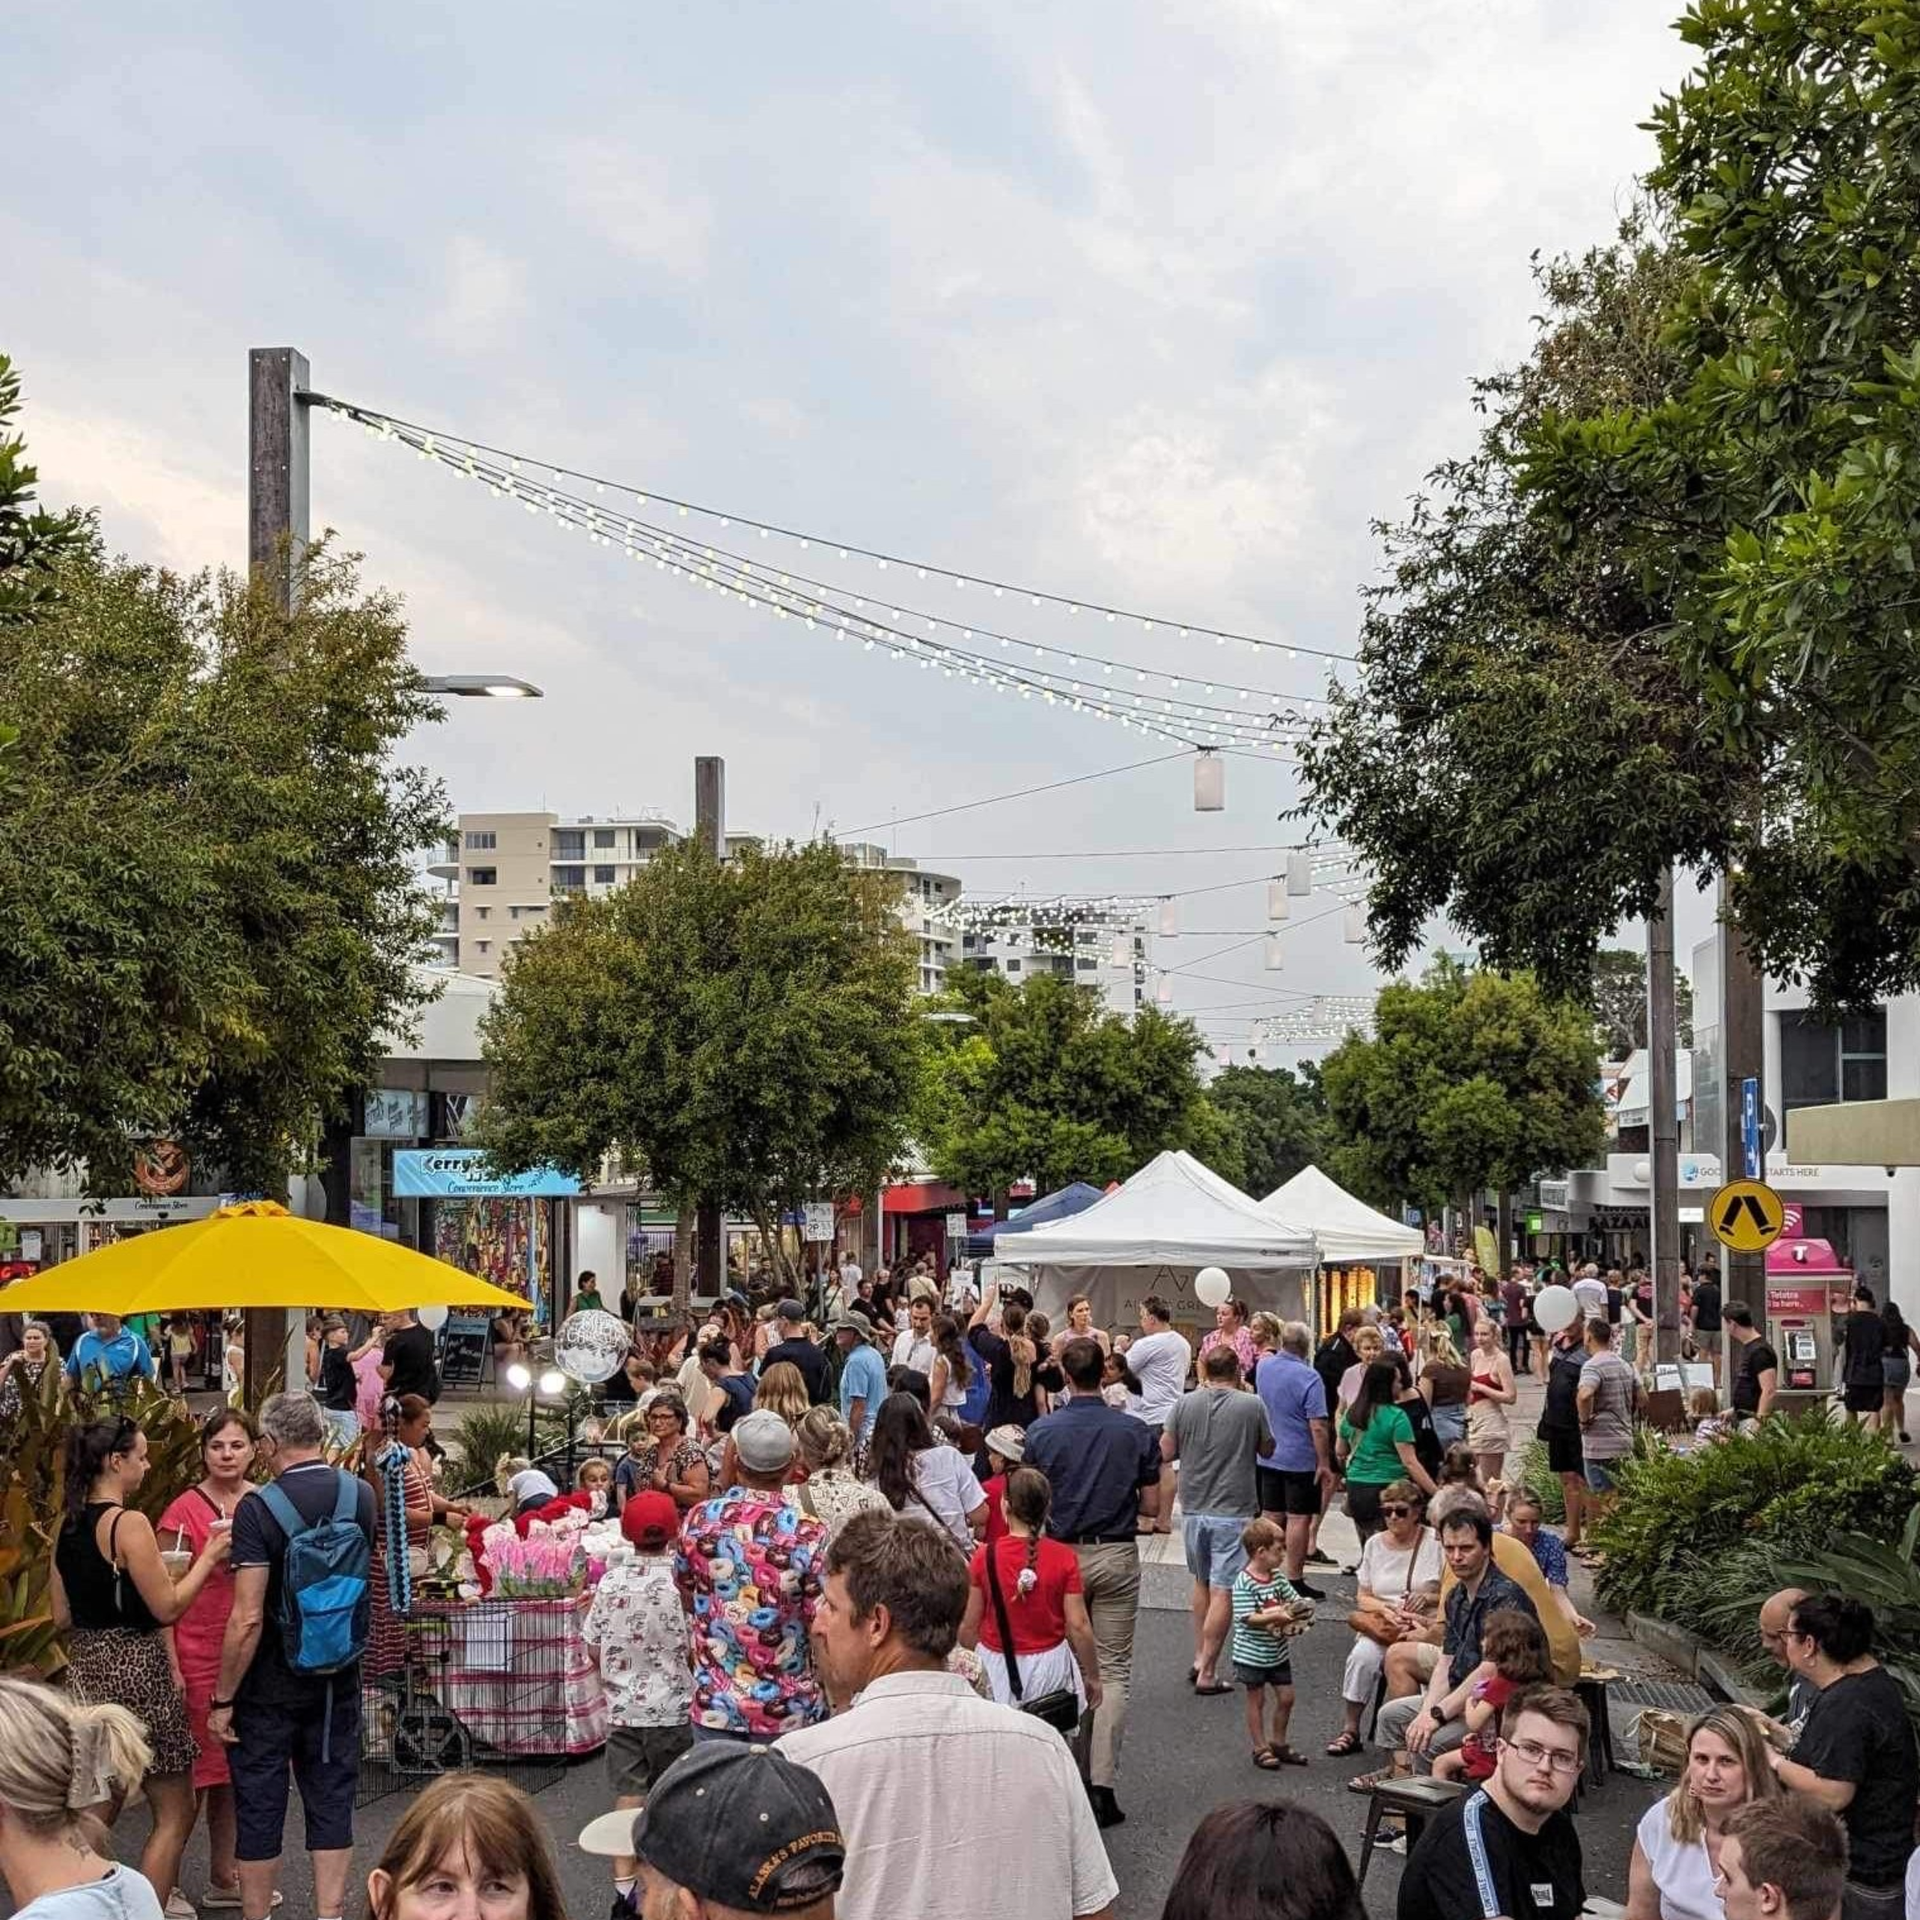 Caloundra Street Fair